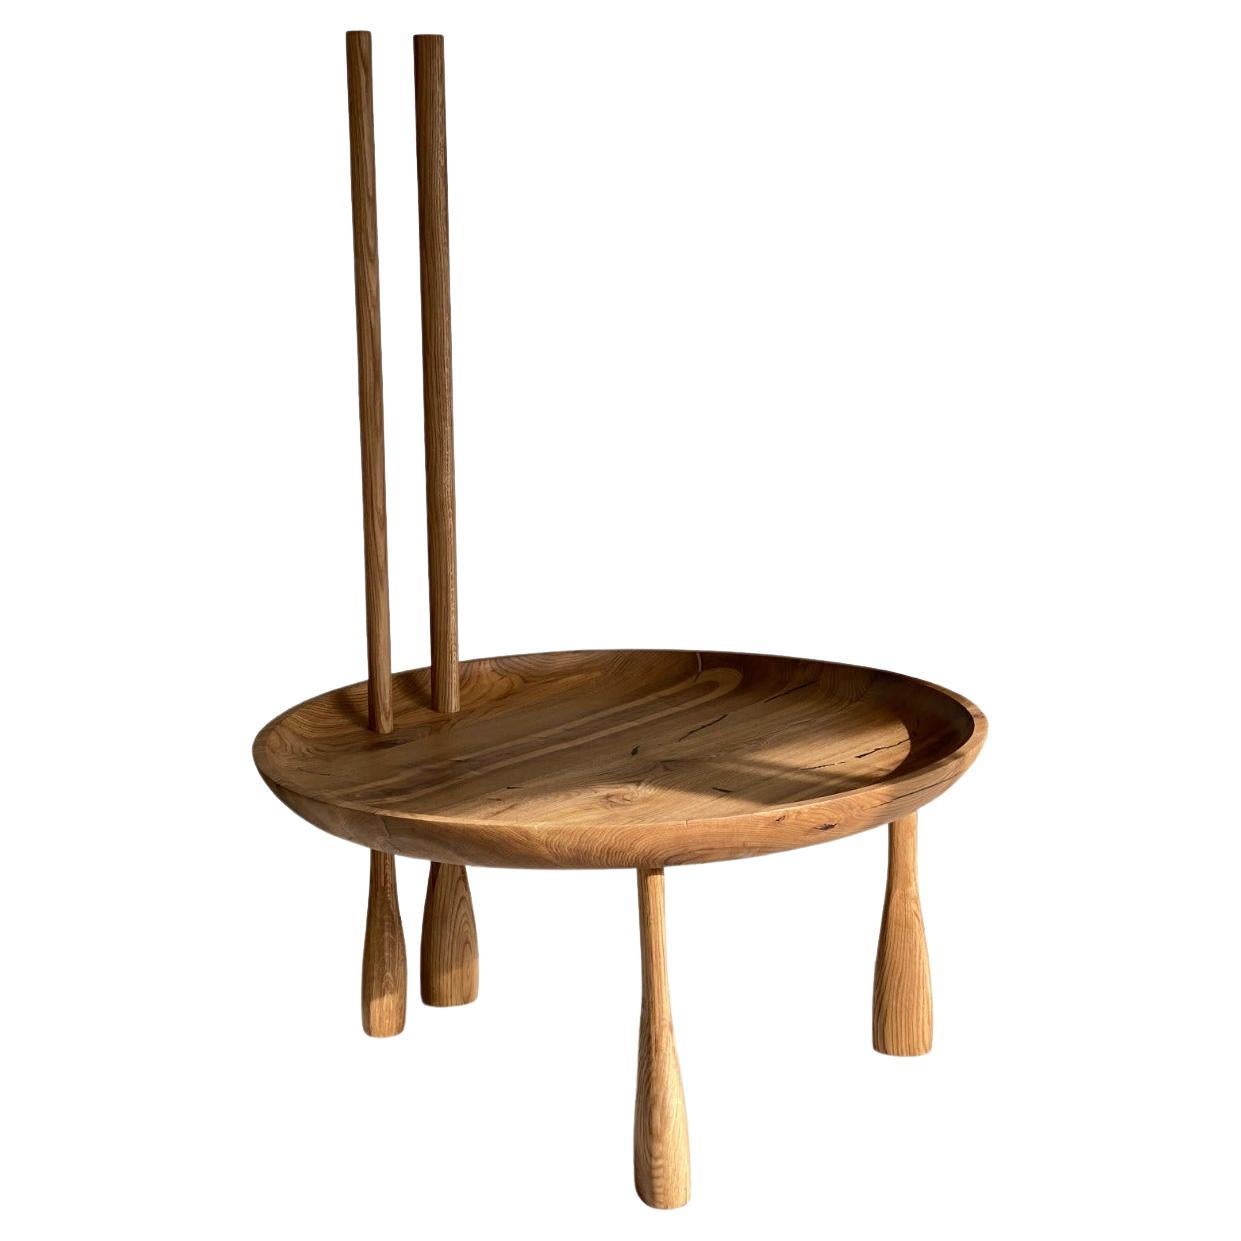 Table basse d'appoint minimaliste en bois Charlotte D90 par Olga Engel